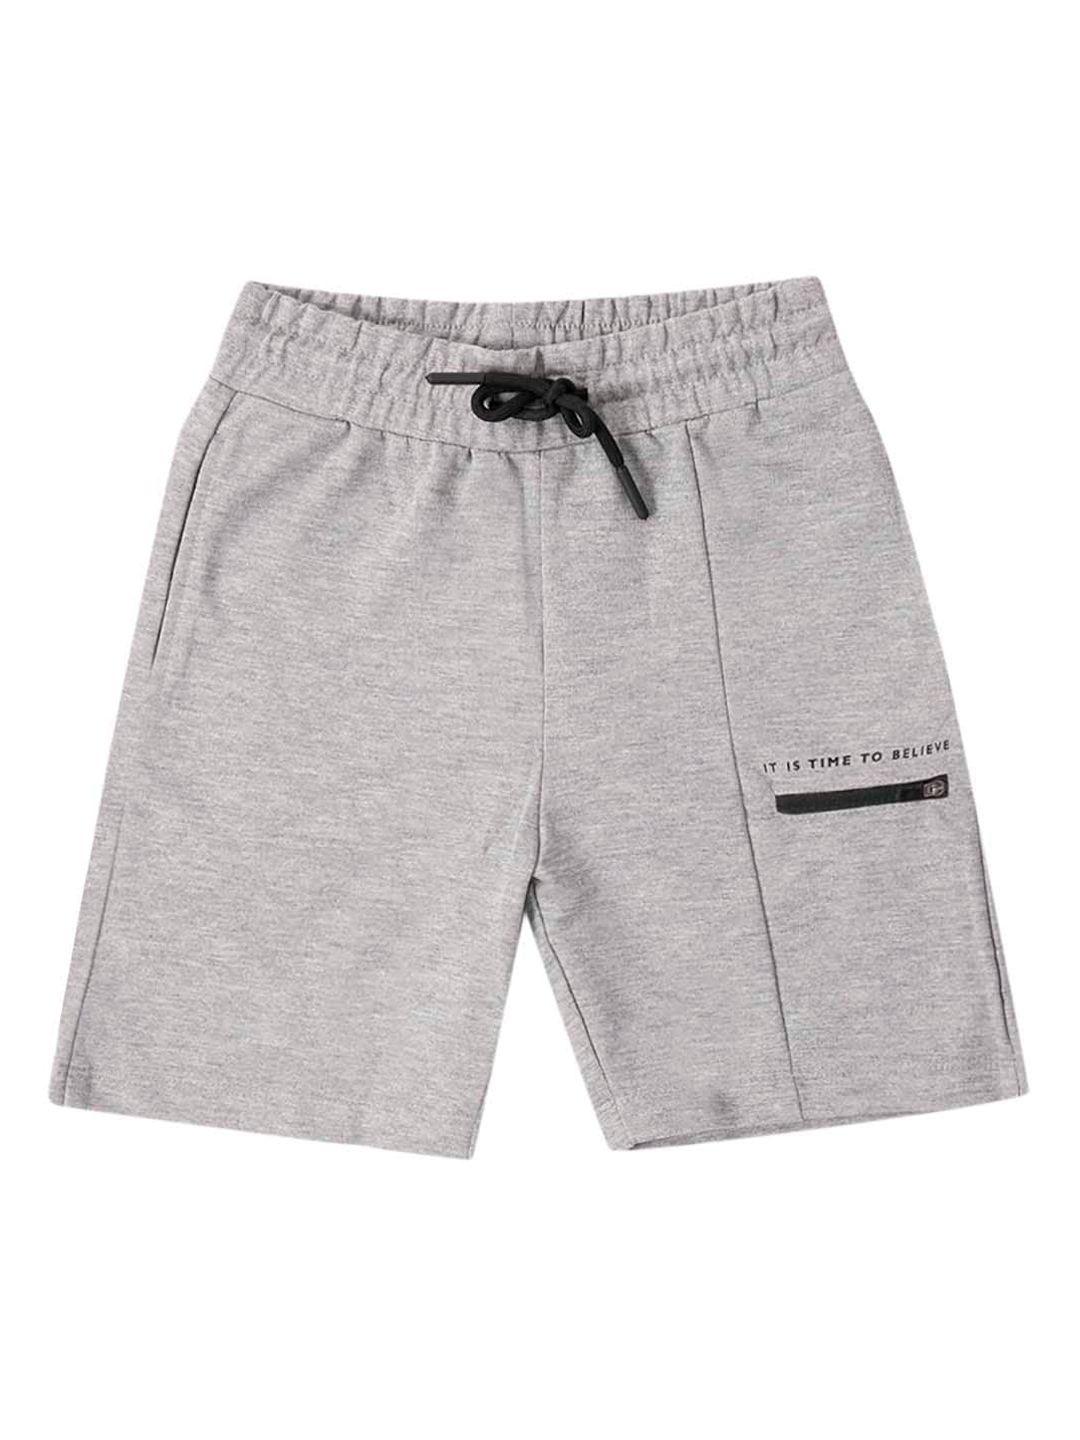 cantabil boys grey shorts